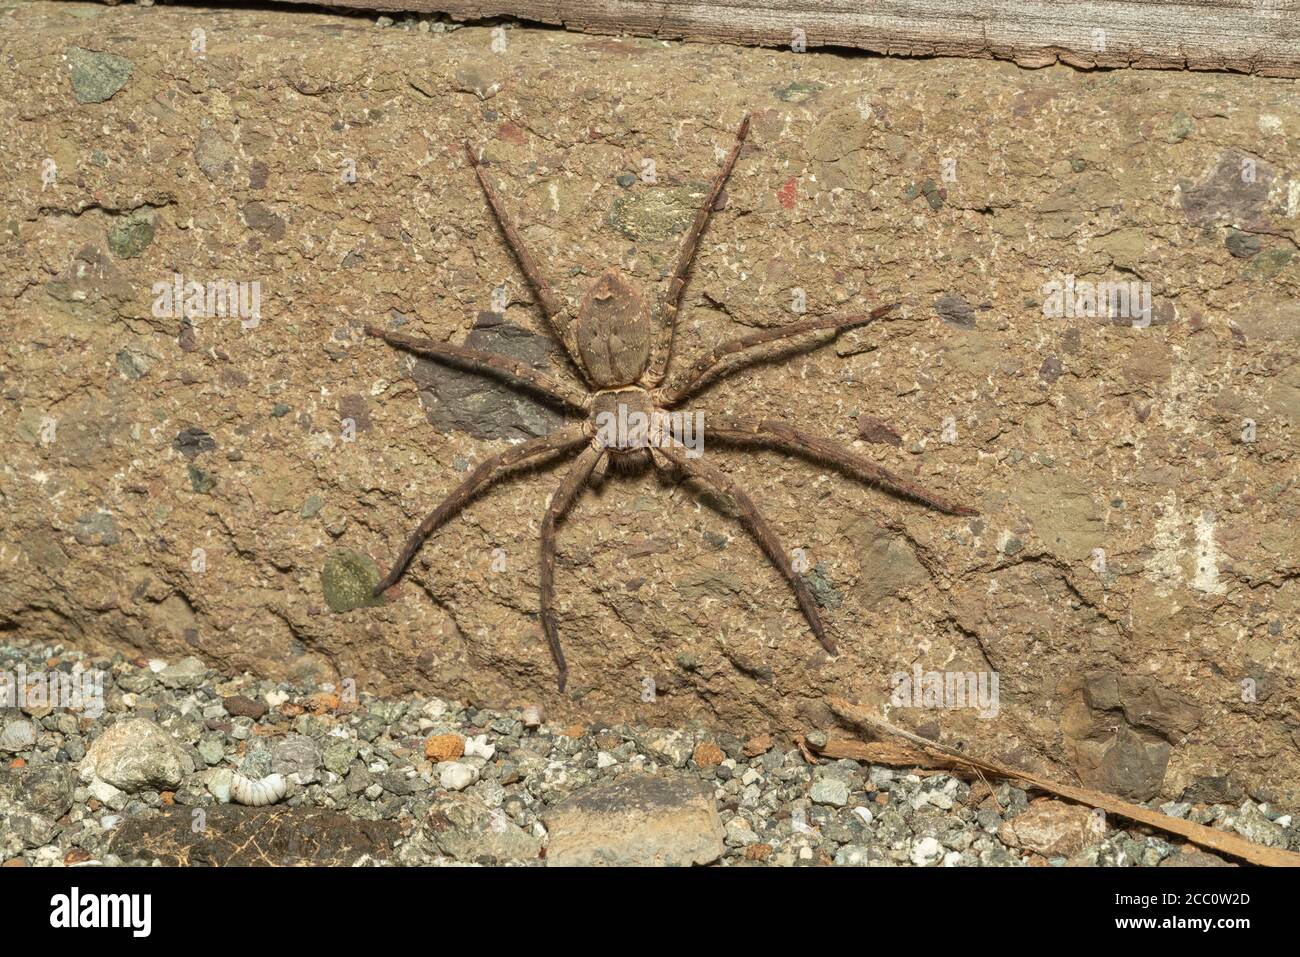 Huntsman spider (Heteropoda venatoria), Isehara City, Kanagawa Prefecture, Japan Stock Photo